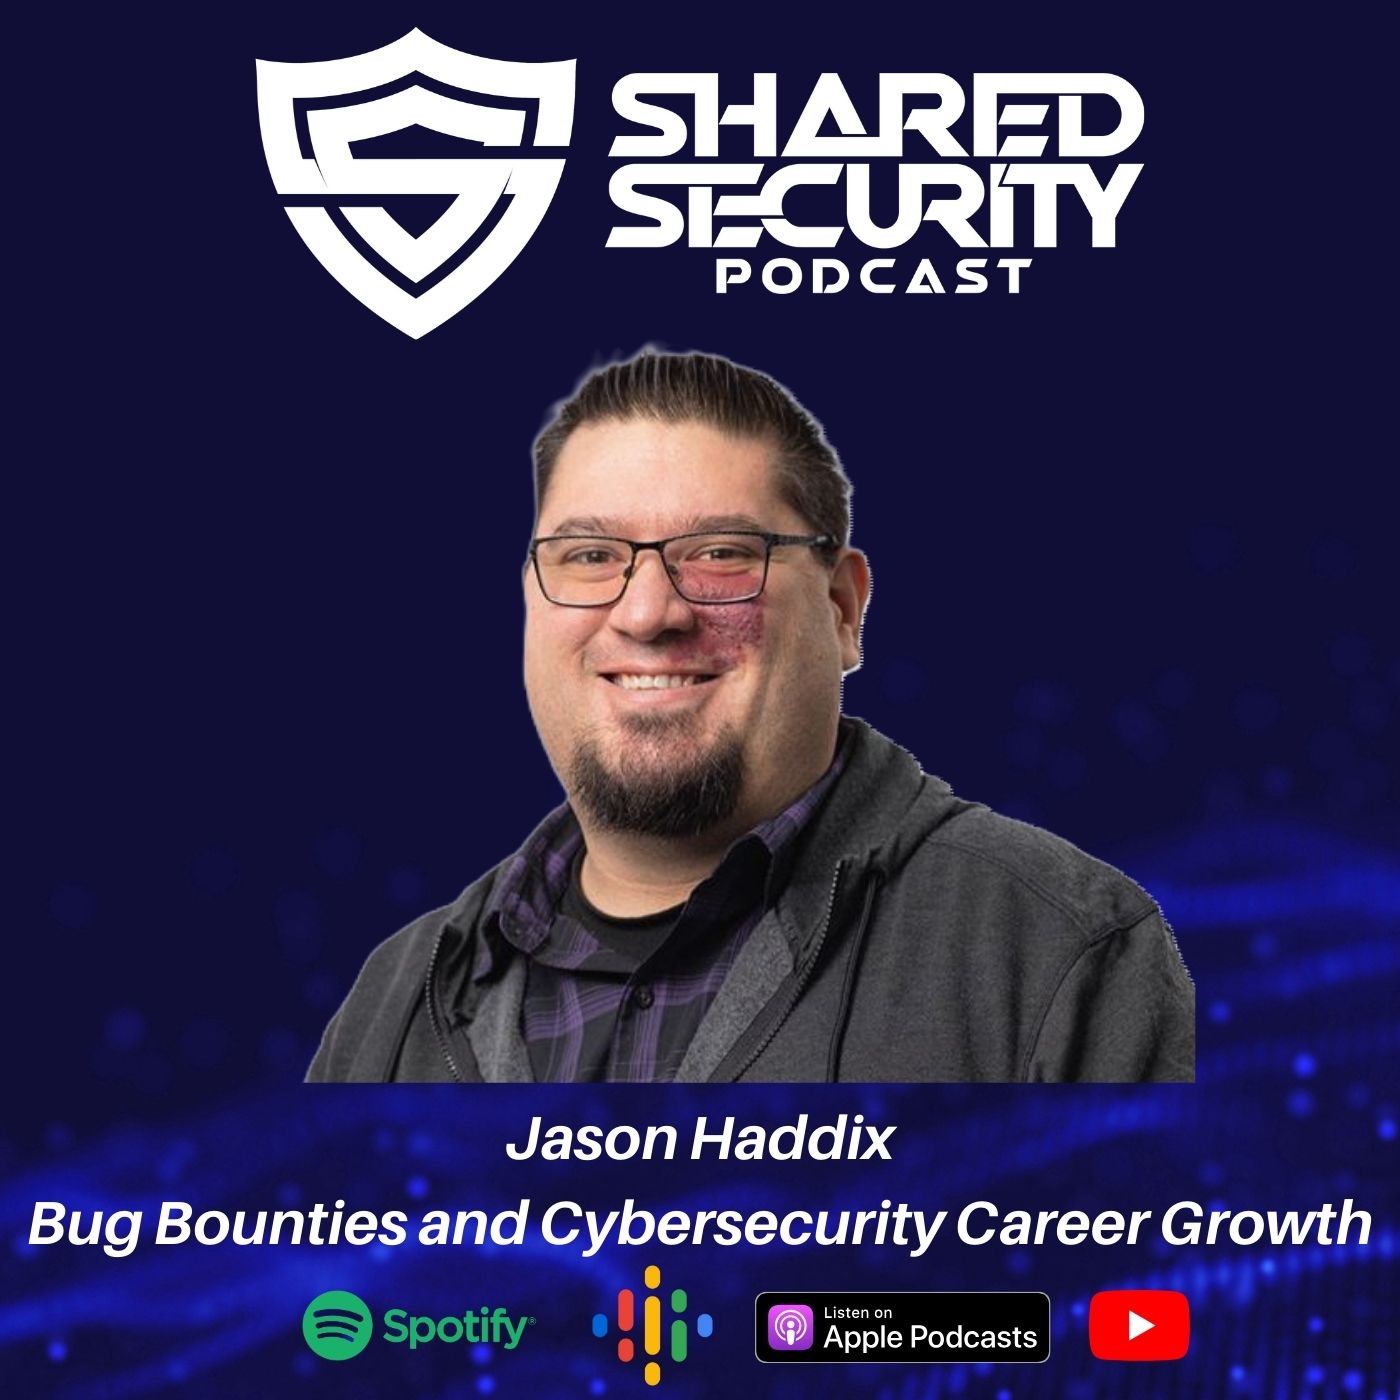 Jason Haddix on Bug Bounties and Cybersecurity Career Growth